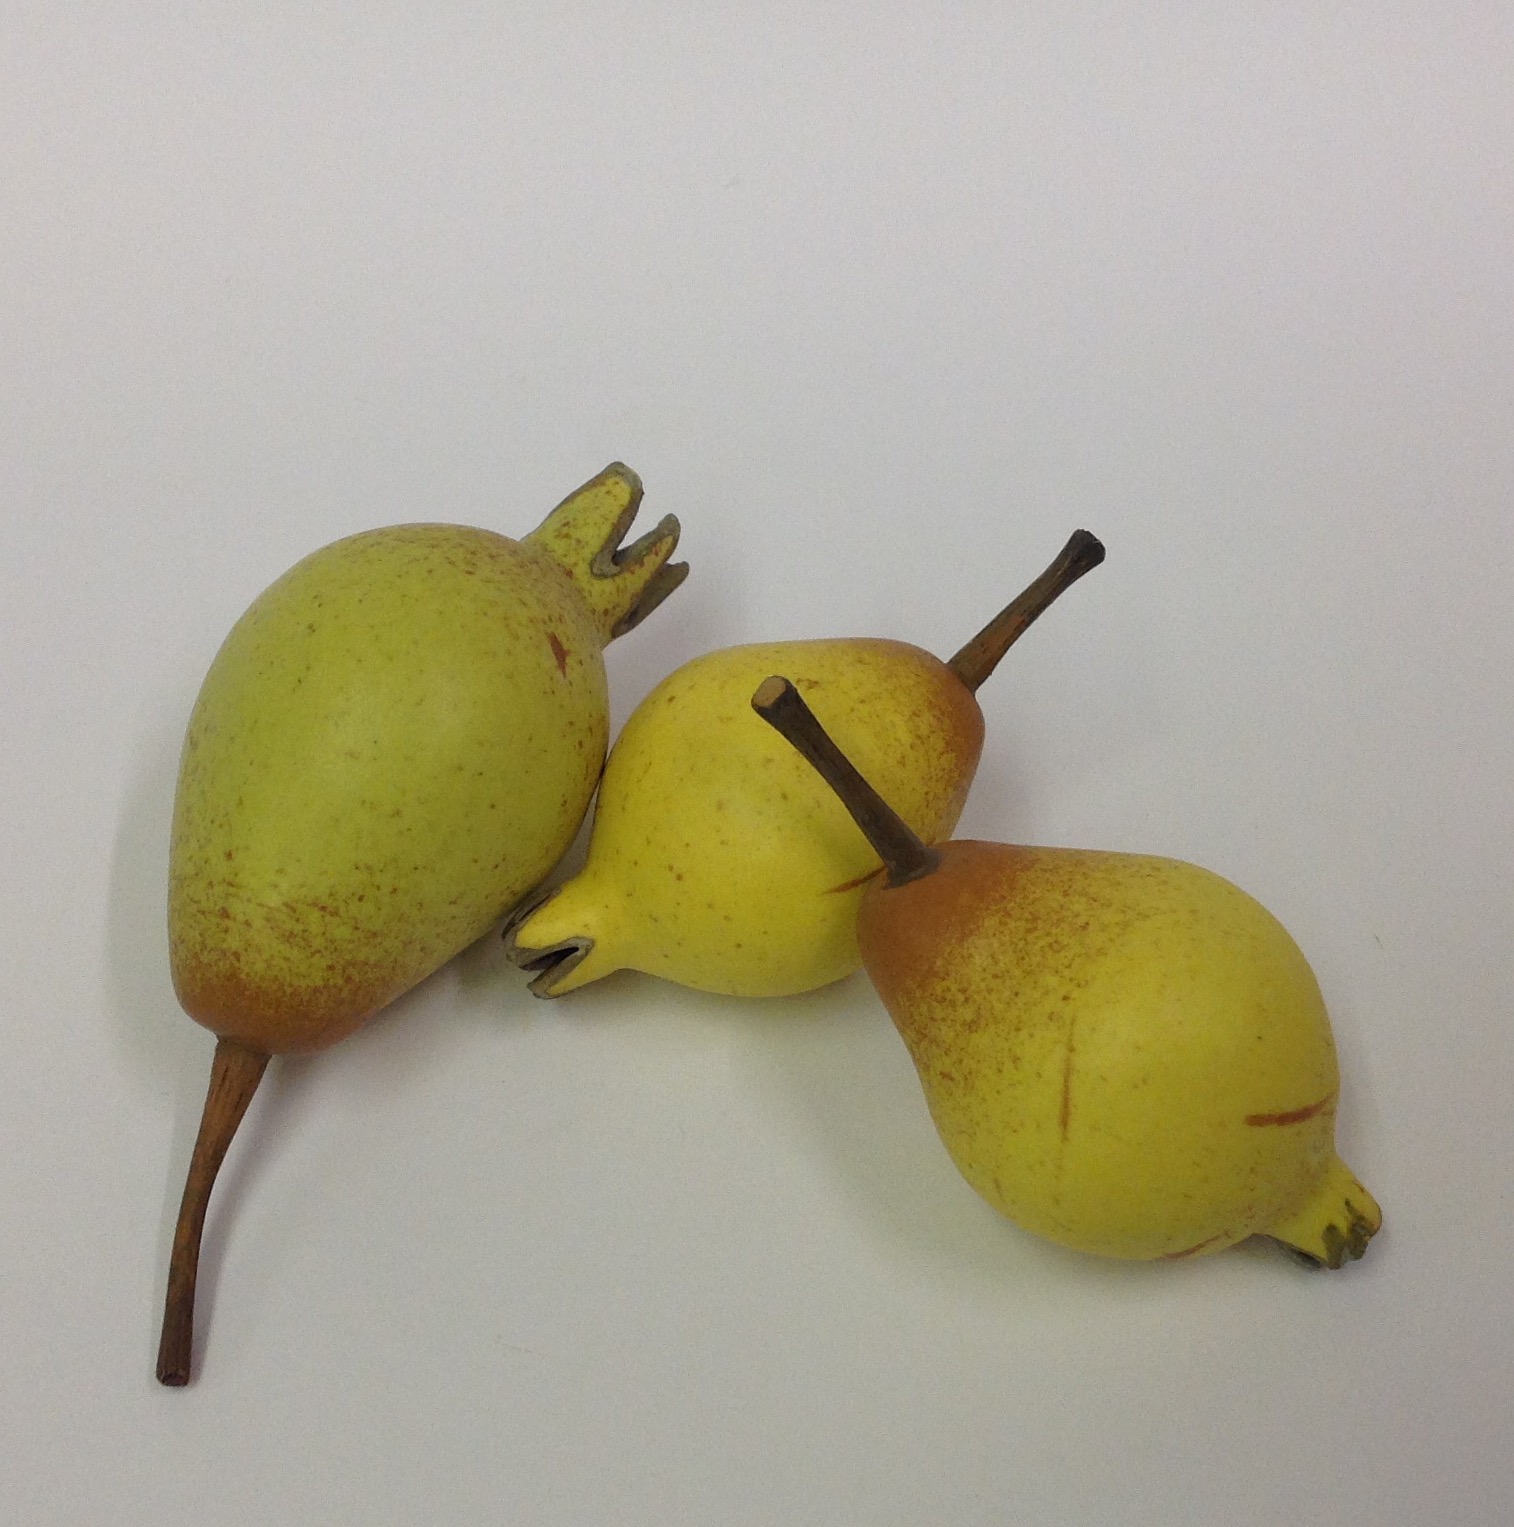 Tettenhall Dix (small pear)